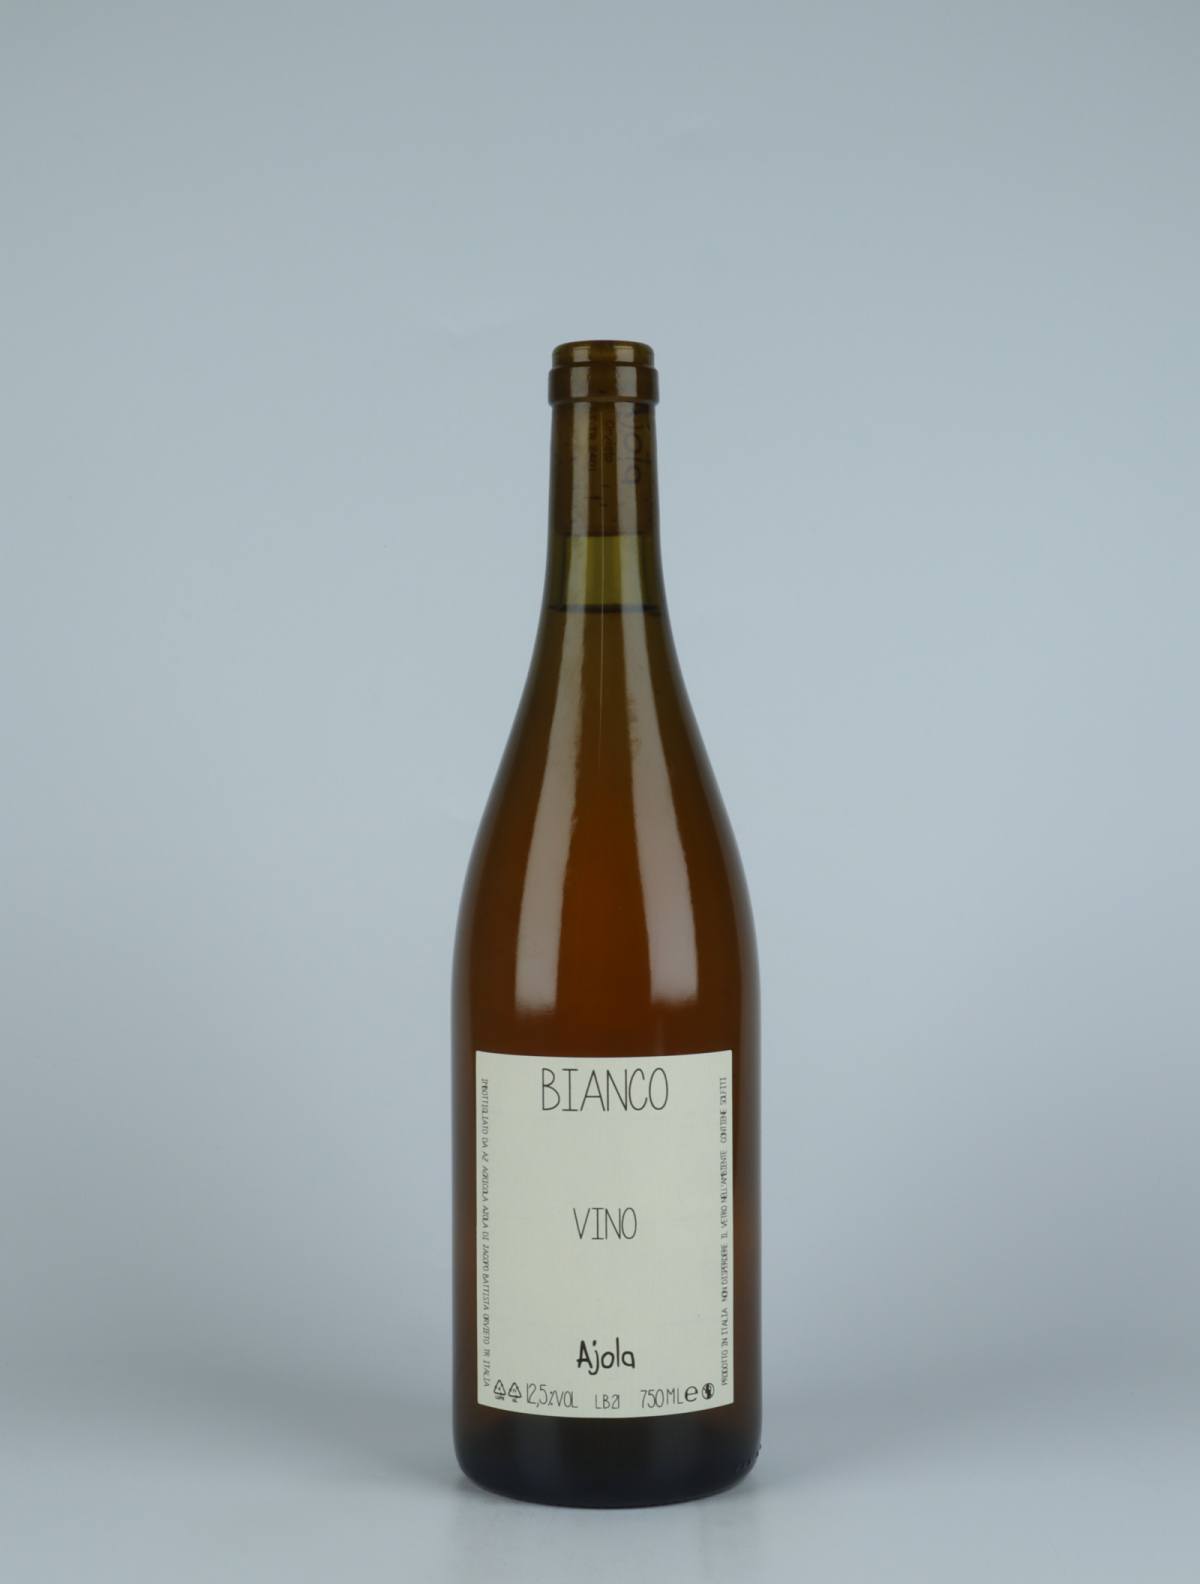 A bottle 2021 Vino Bianco Orange wine from Ajola, Umbria in Italy